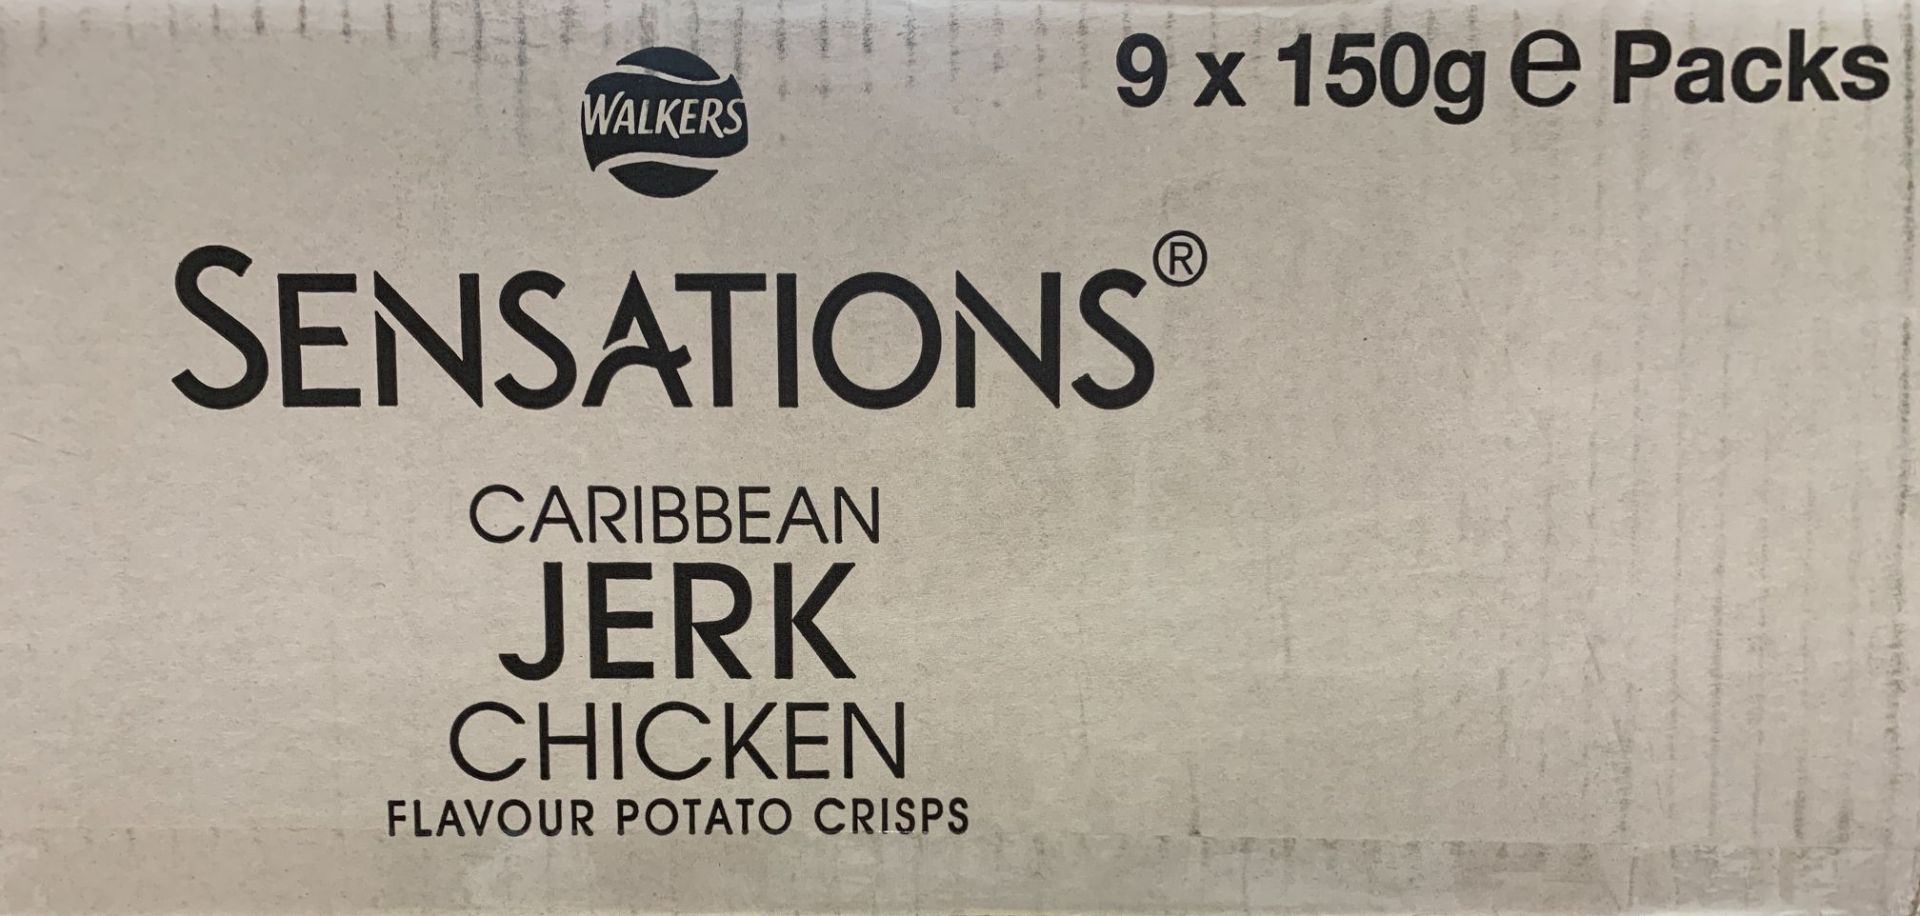 ONE LOT TO CONTAIN SENSATIONS CARIBBEAN JERK CHICKEN CRISPS - 9 x 150G PACKS